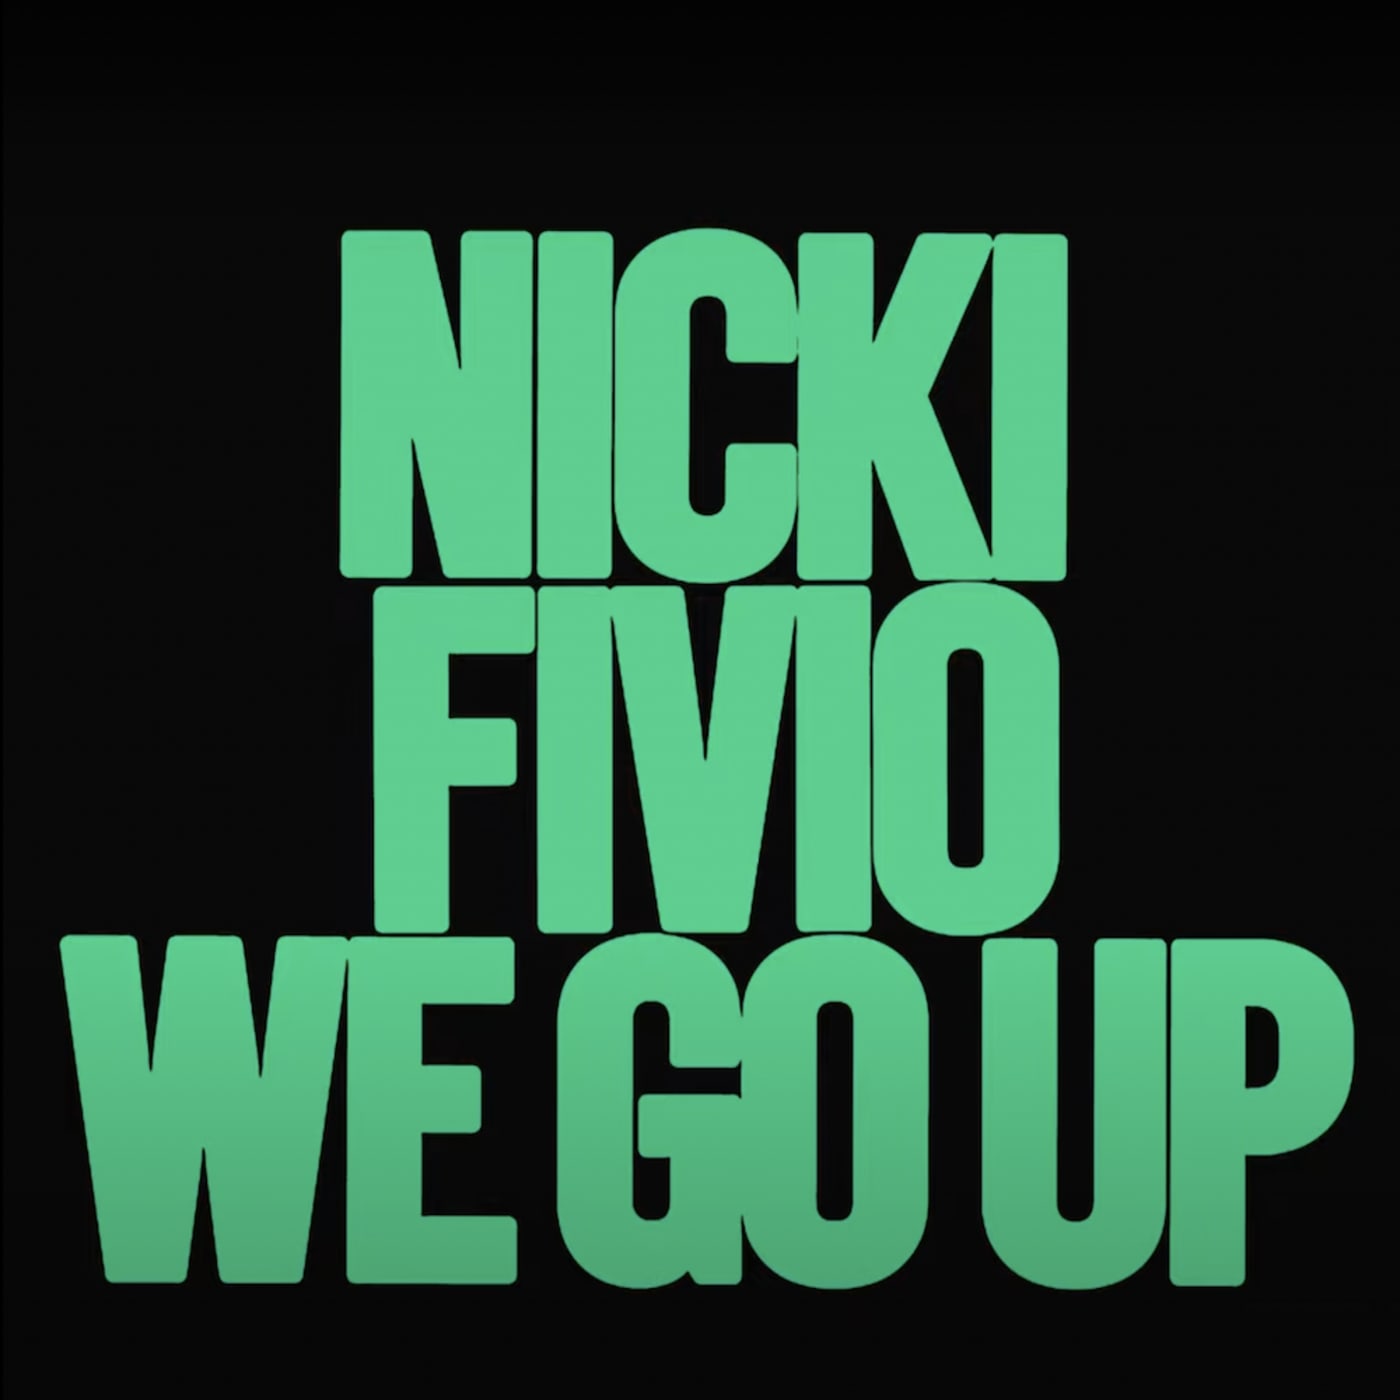 Nicki Minaj and Fivio Foreign link on new track "We go up."